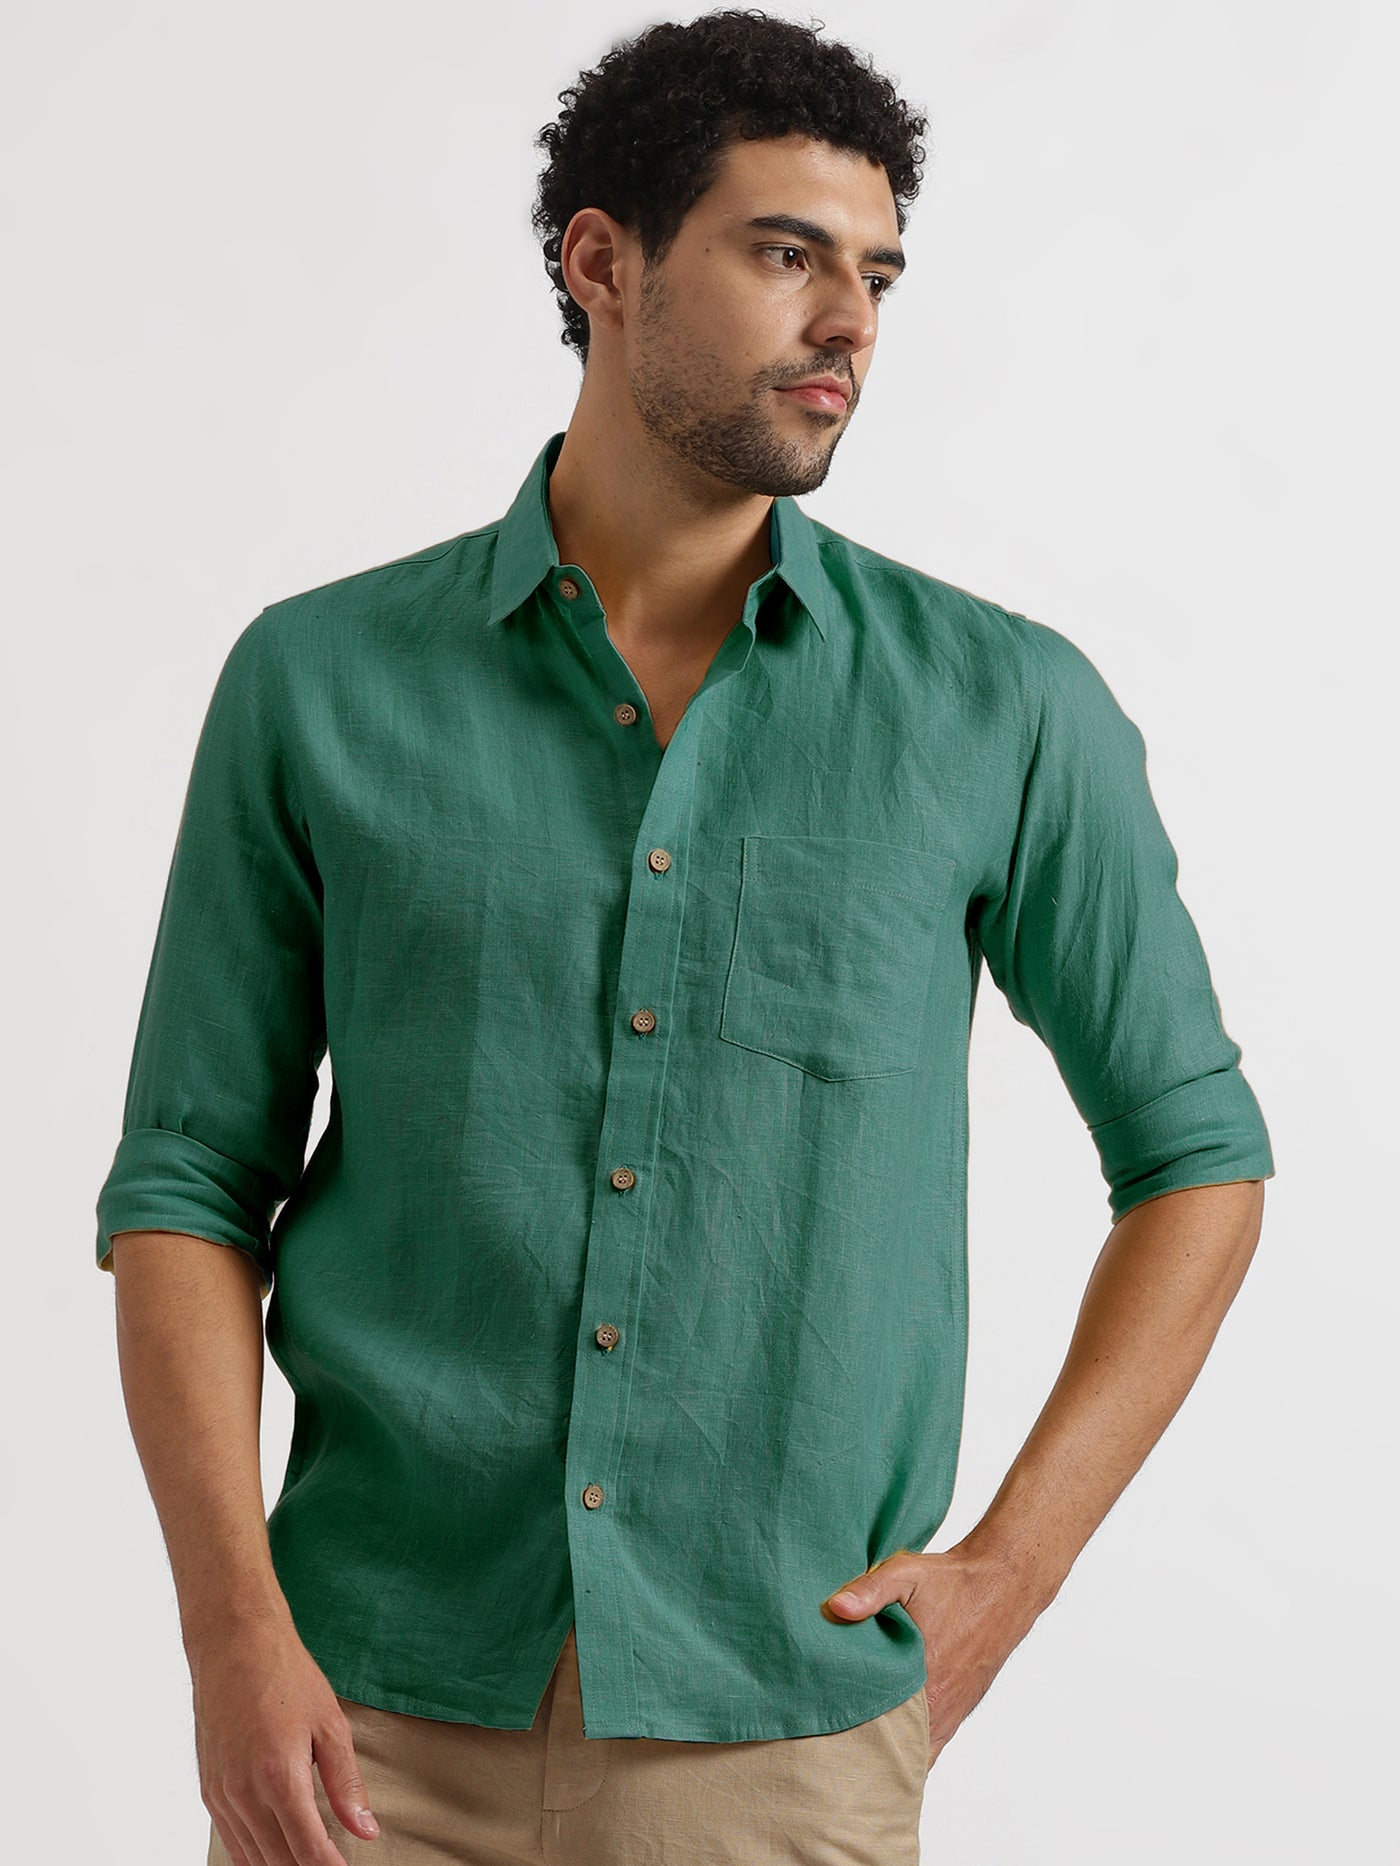 Harvey - Pure Linen Full Sleeve Shirt - Teal Green